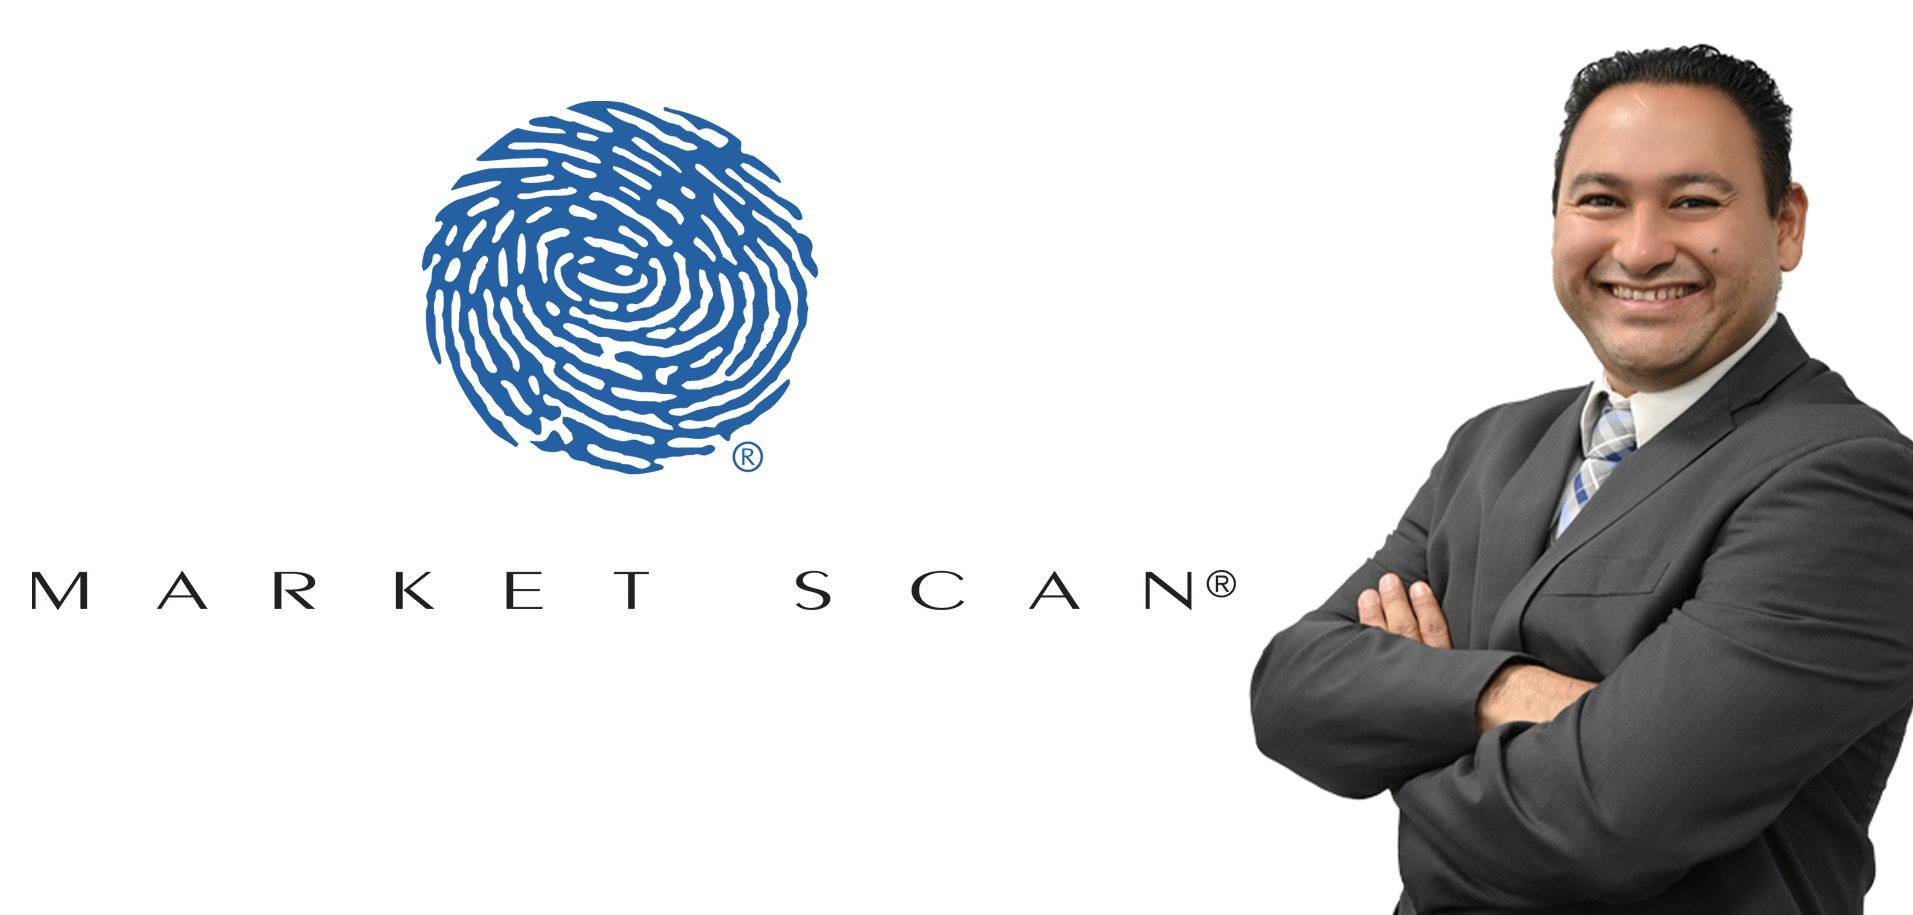 Market Scan Logo with Jose Galvan